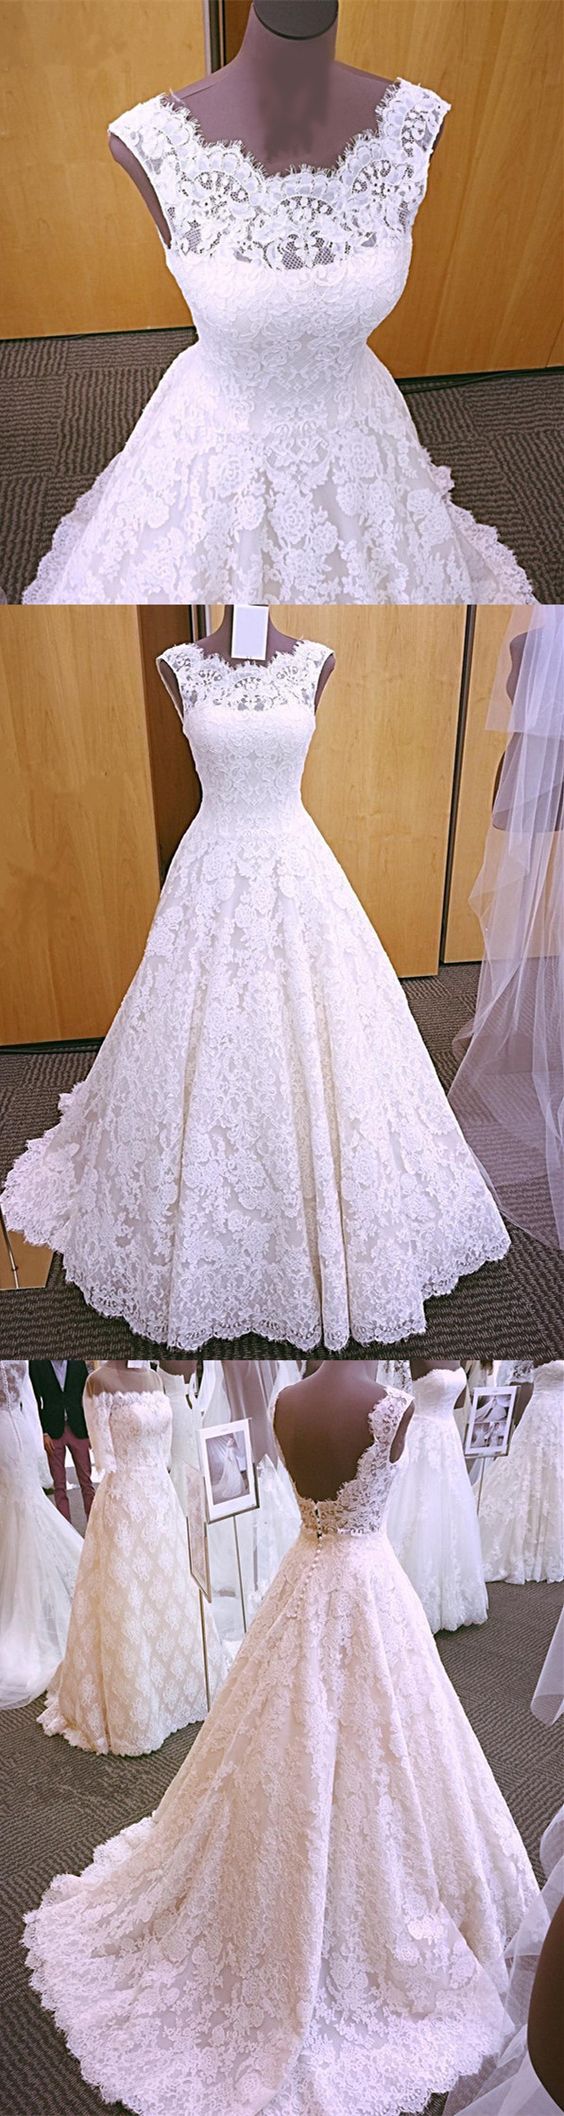 Vintage Cap Sleeves Open Back Lace Wedding Dresses M6578